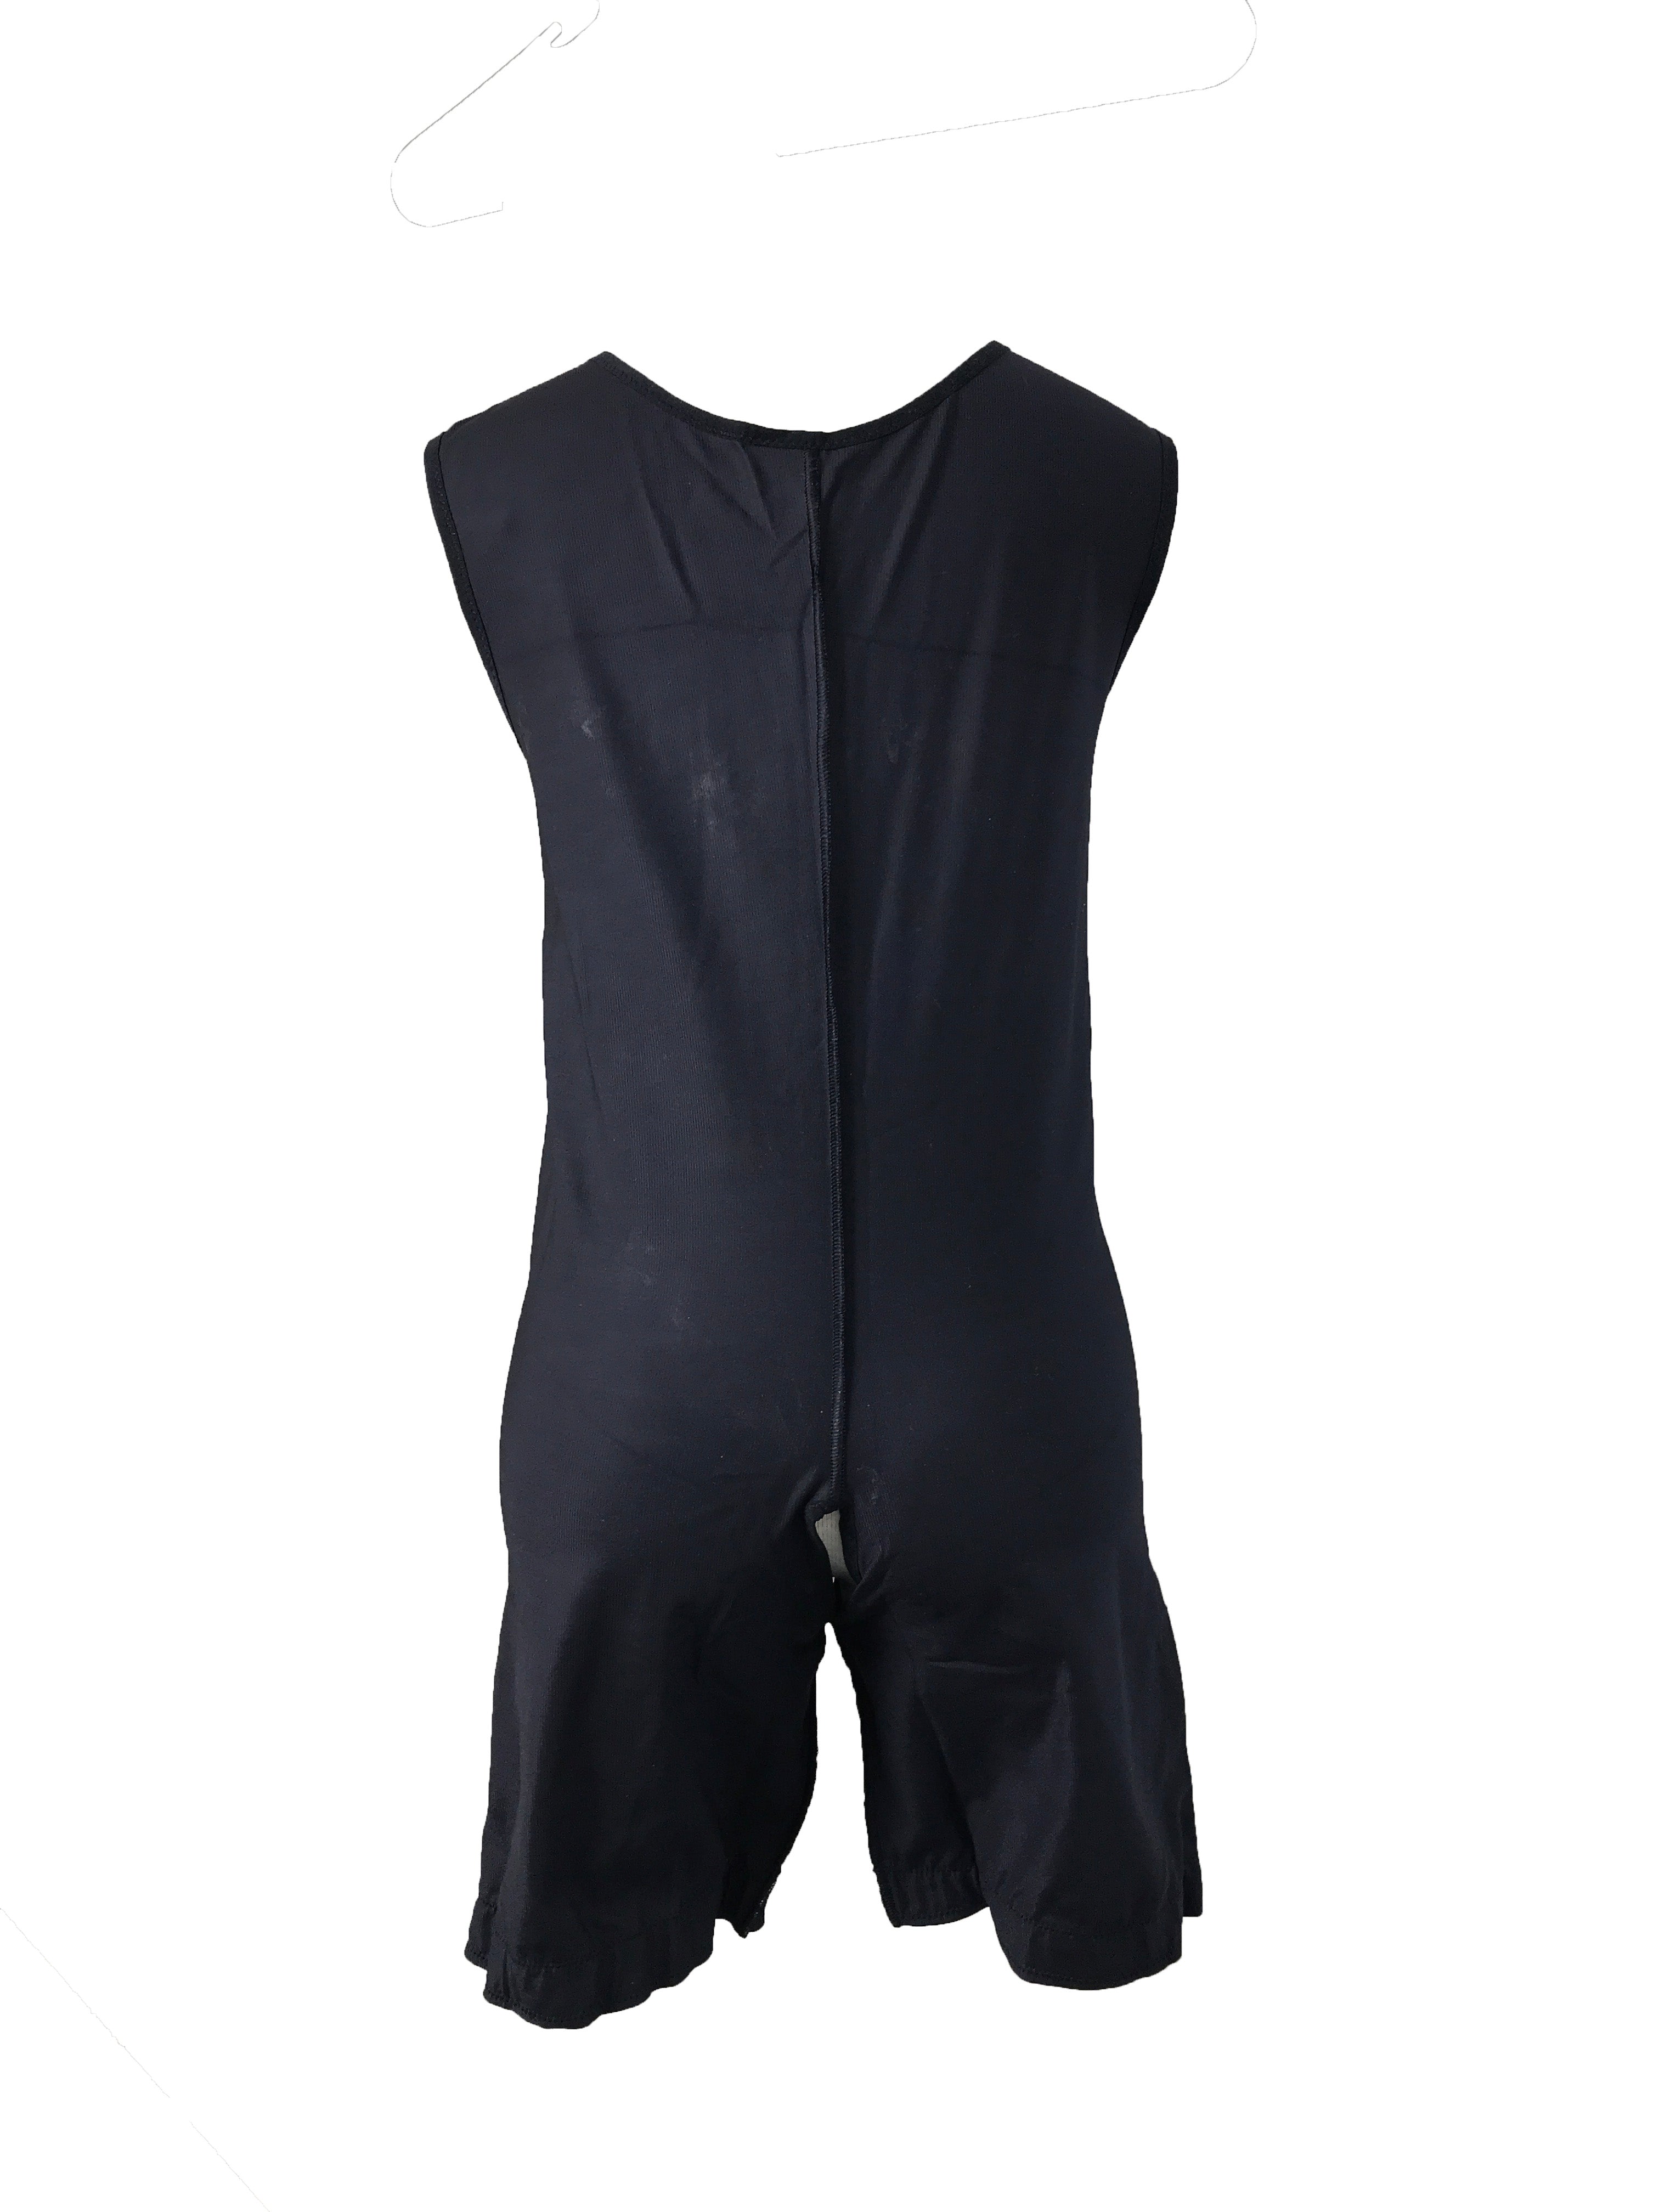 Marena ComfortWear Compression and Support Garment Black Bodysuit Men's Size XL